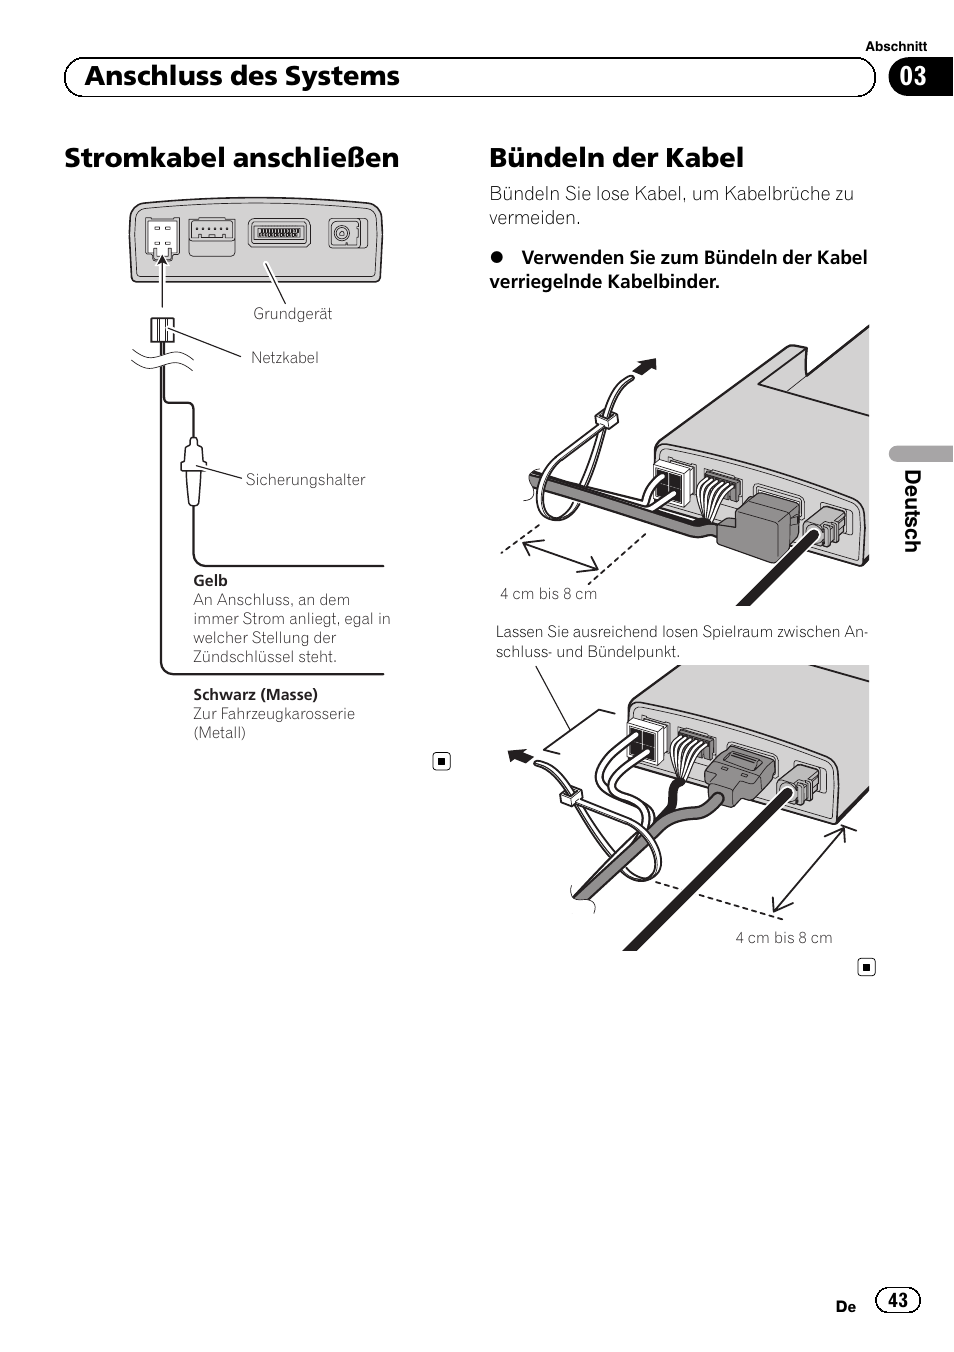 Stromkabel anschließen, Bündeln der kabel, 03 anschluss des systems | Pioneer  AVIC-F220 User Manual | Page 43 / 112 | Original mode